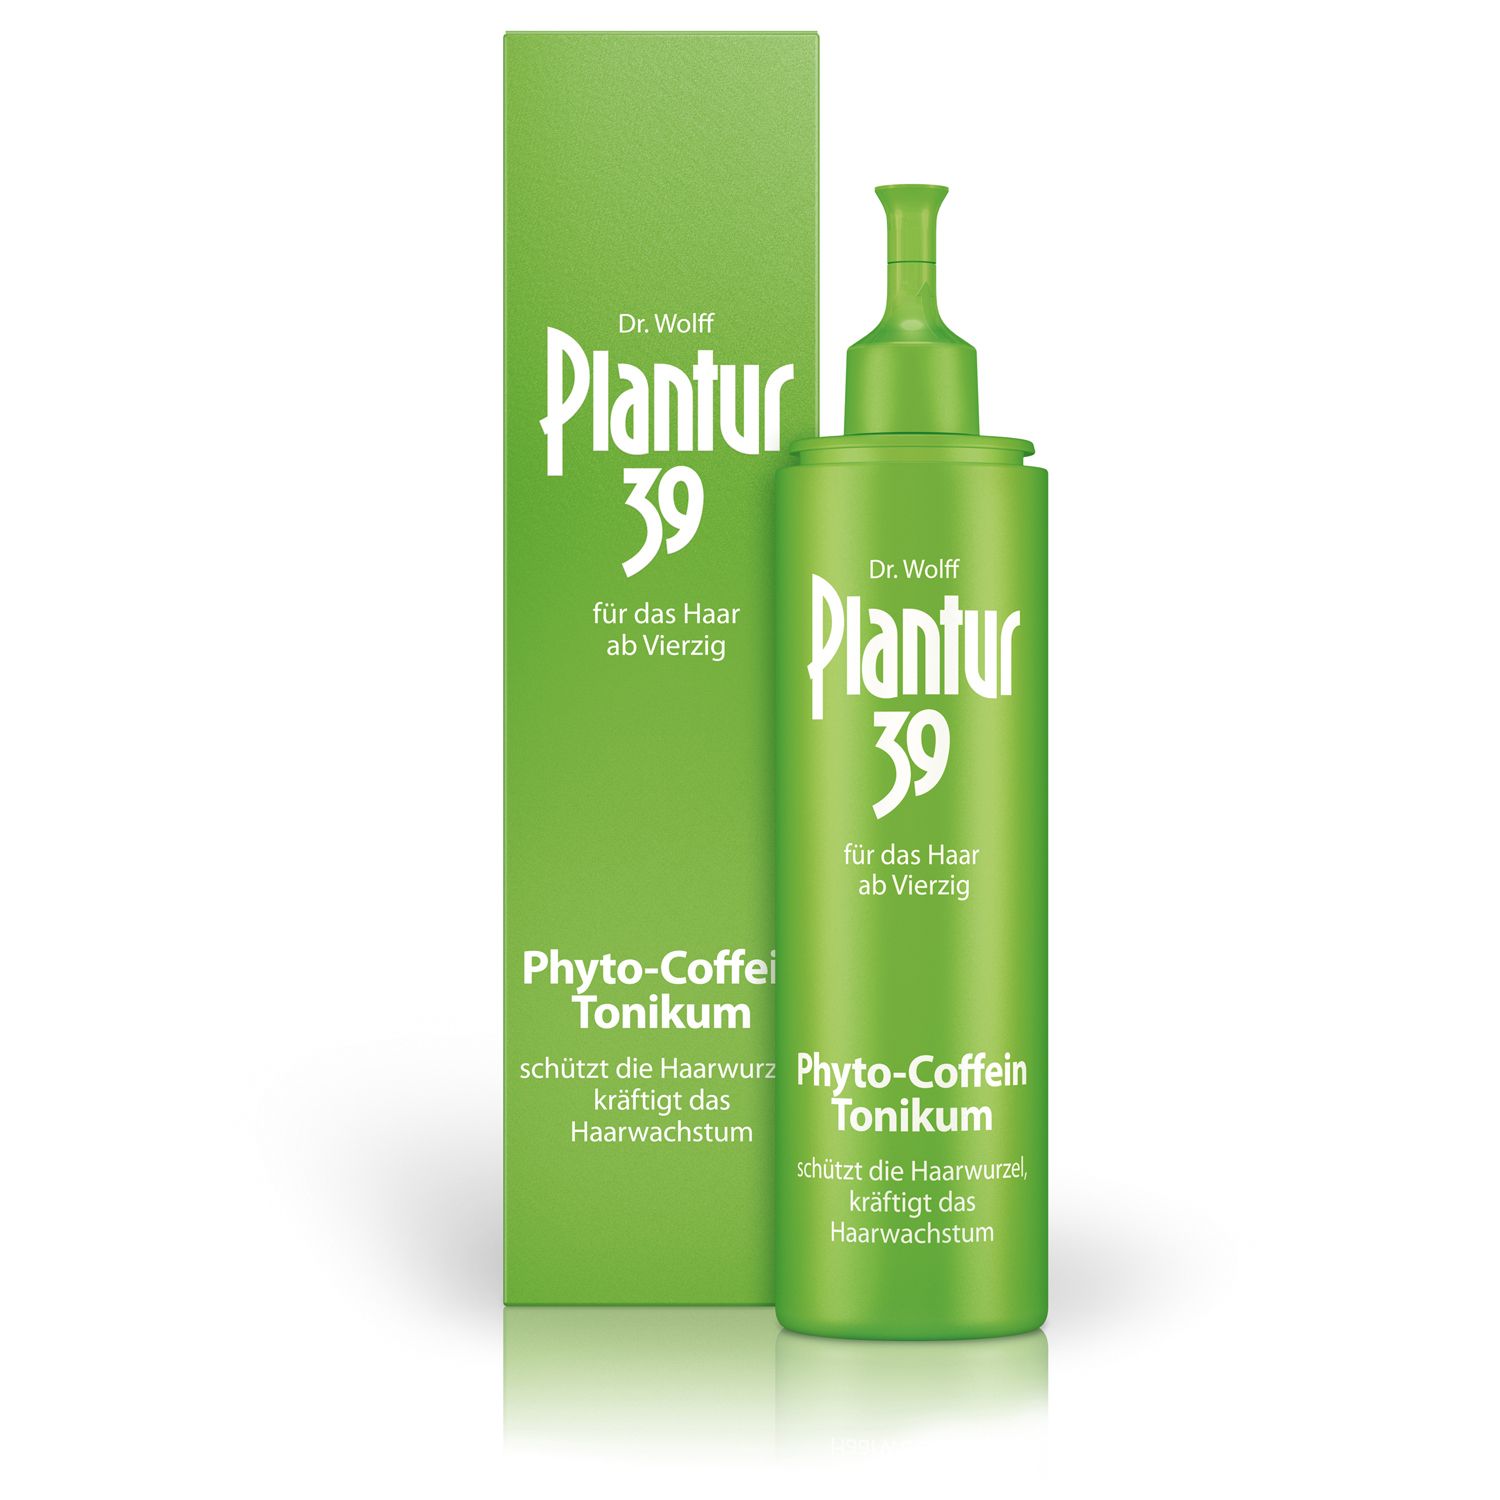 Image of Plantur 39 Phyto-Coffein-Tonikum